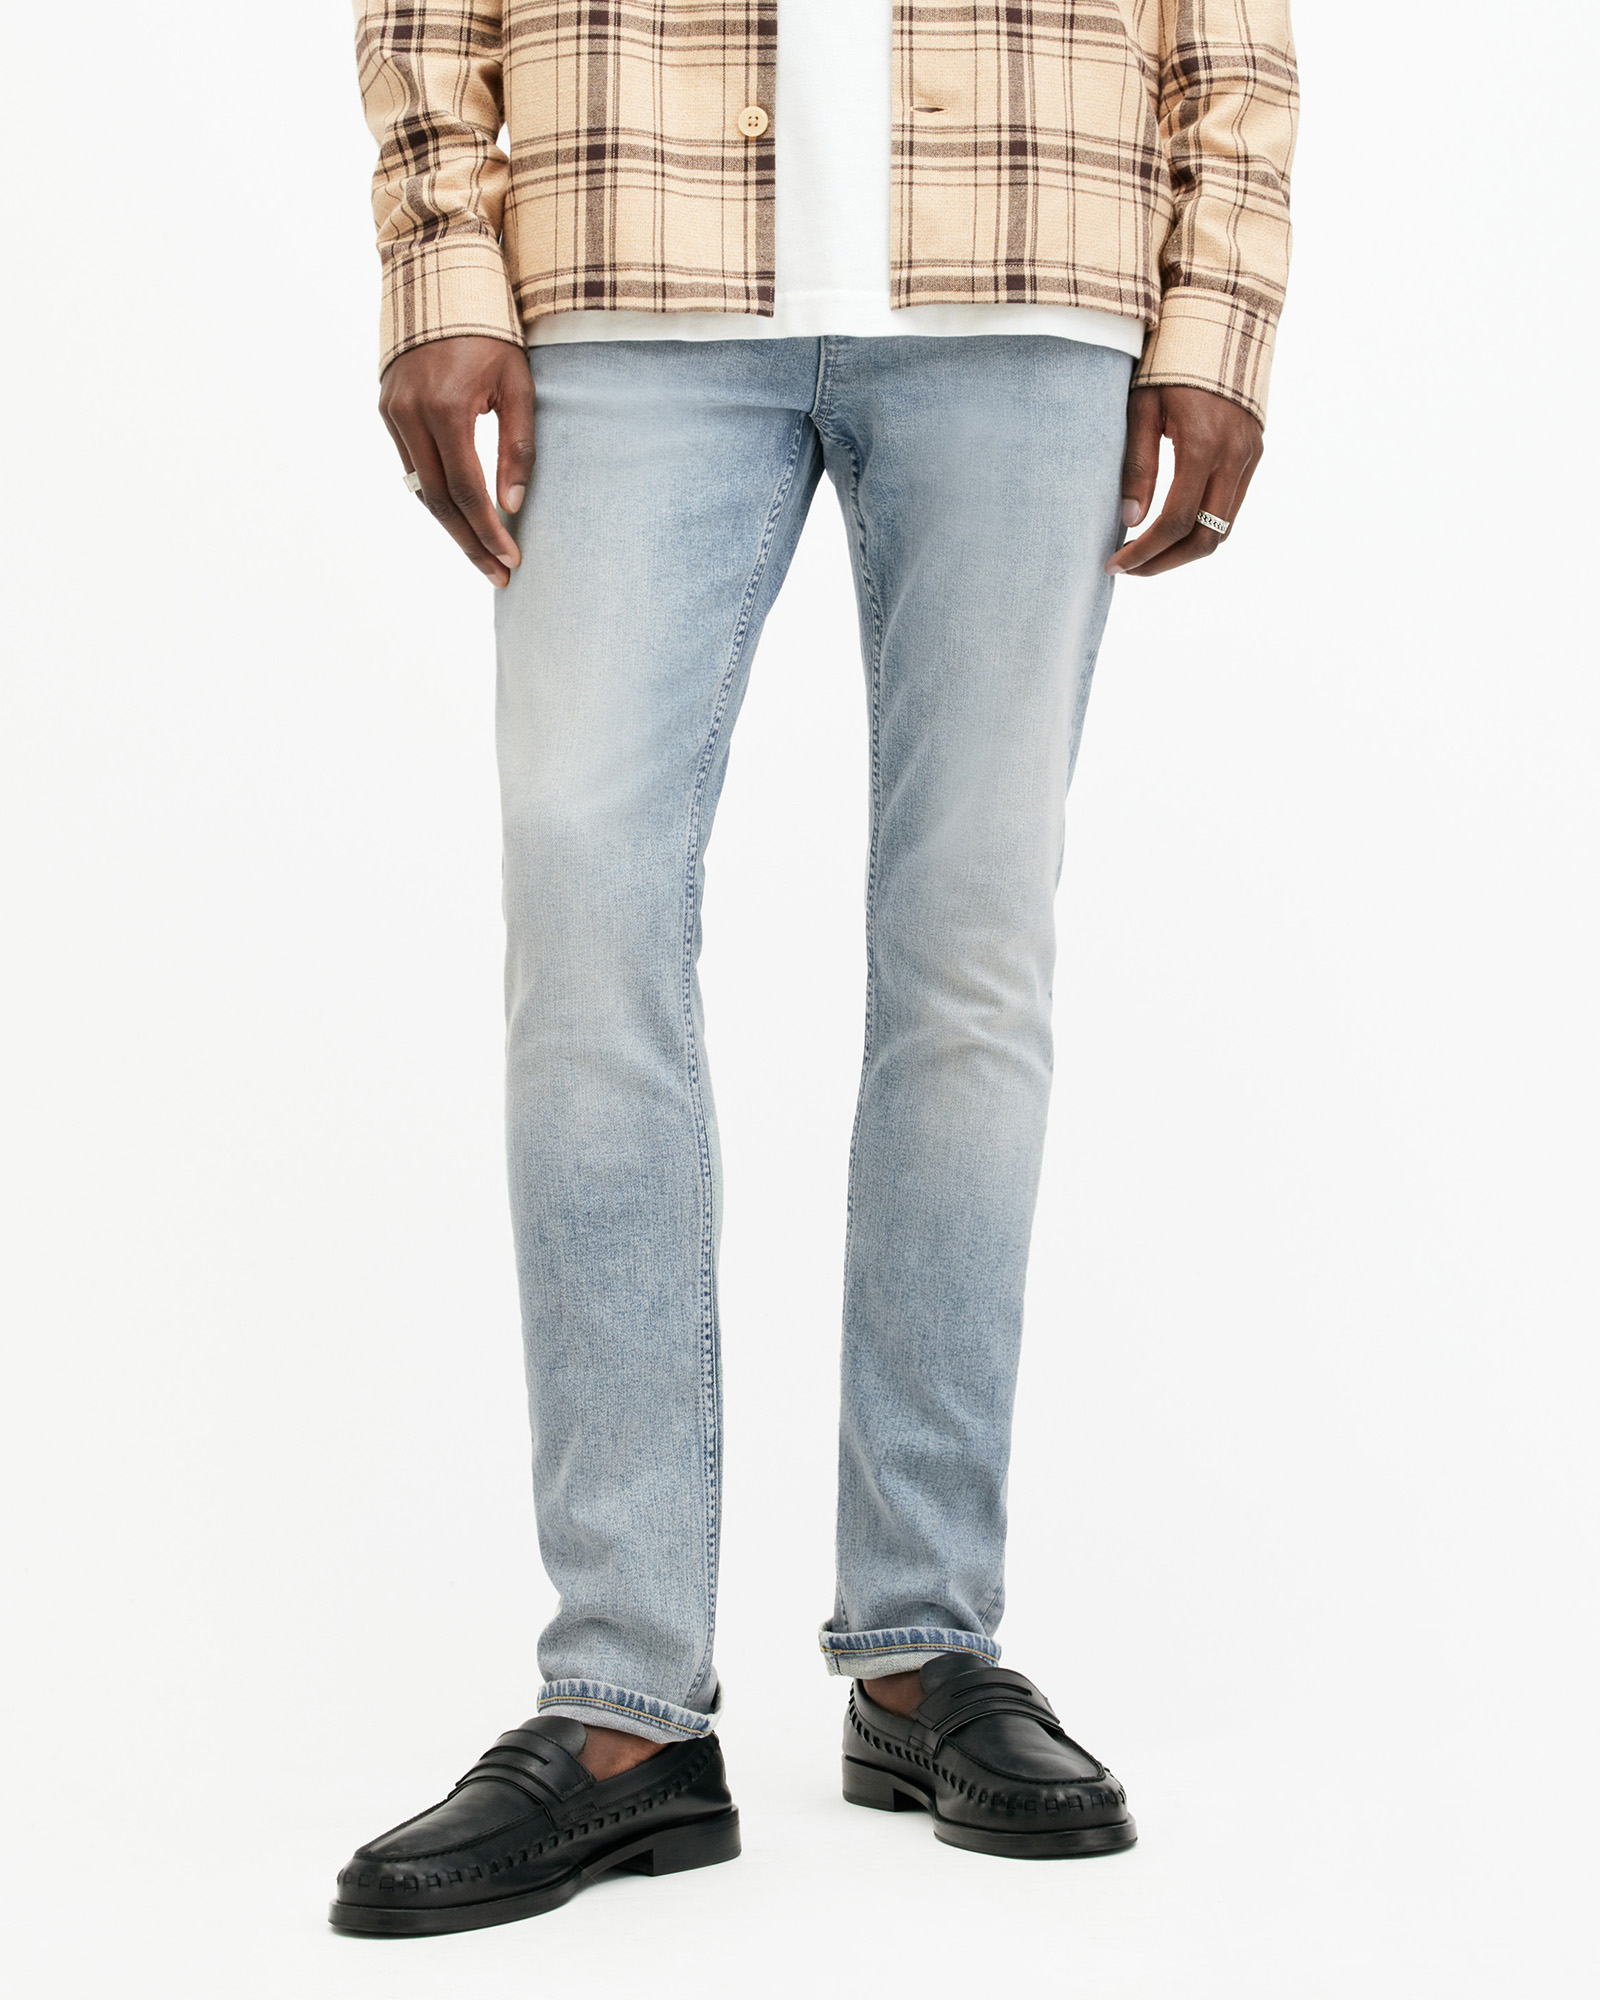 AllSaints Cigarette Skinny Fit Denim Jeans,, Indigo Blue, Size: